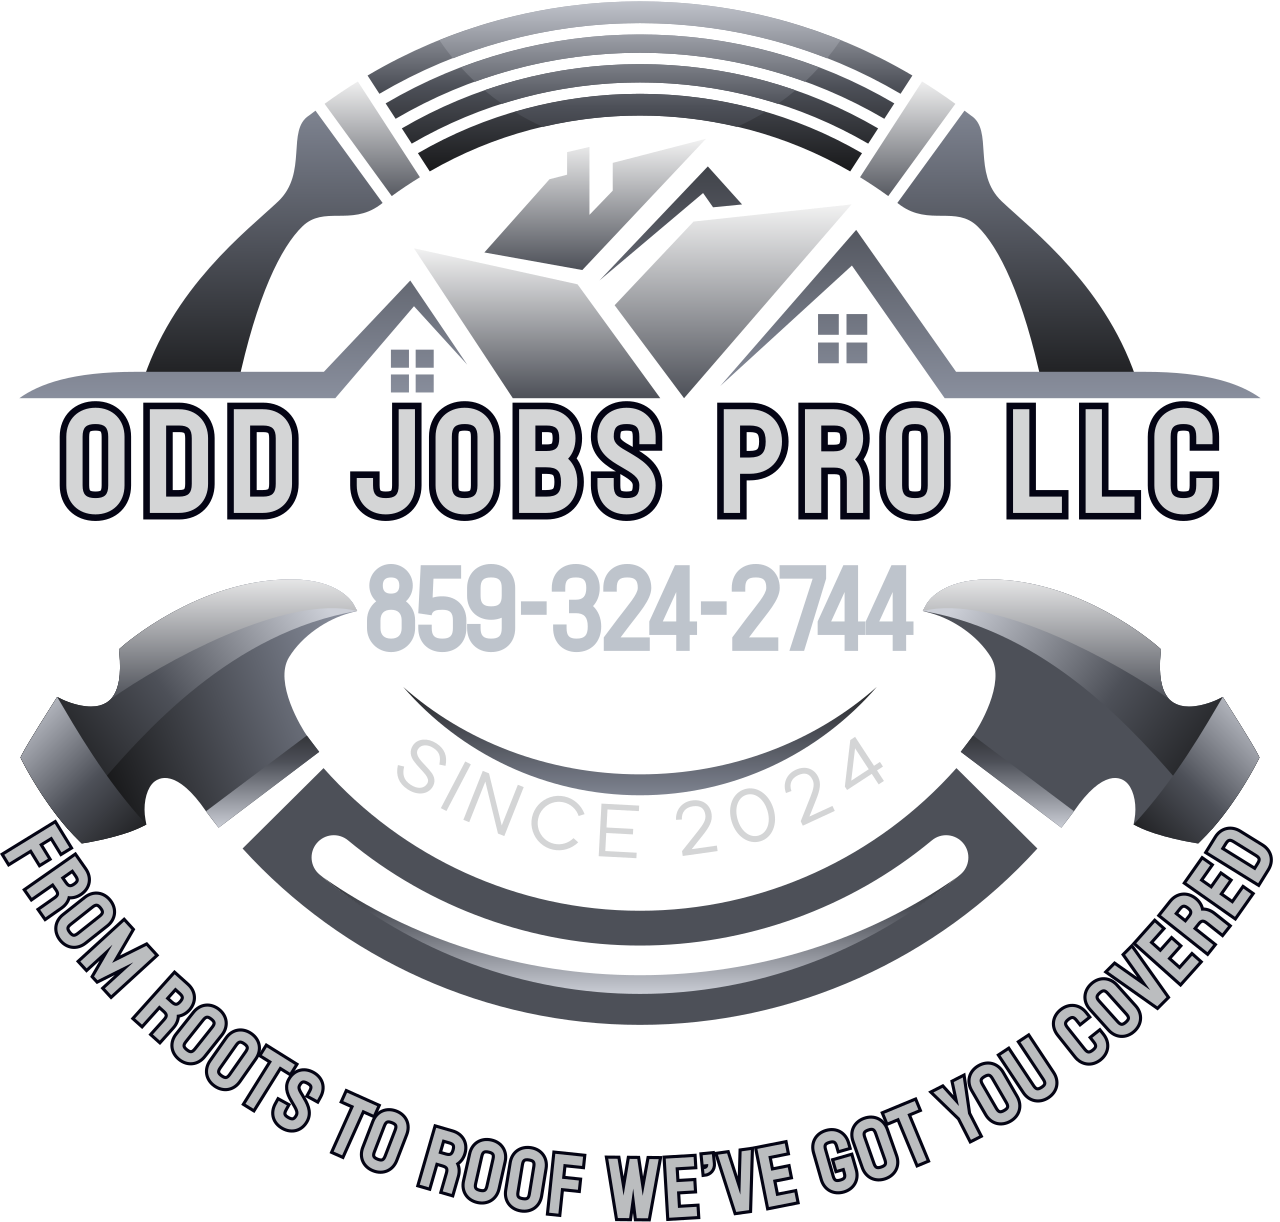 Odd Jobs Pro LLC's logo